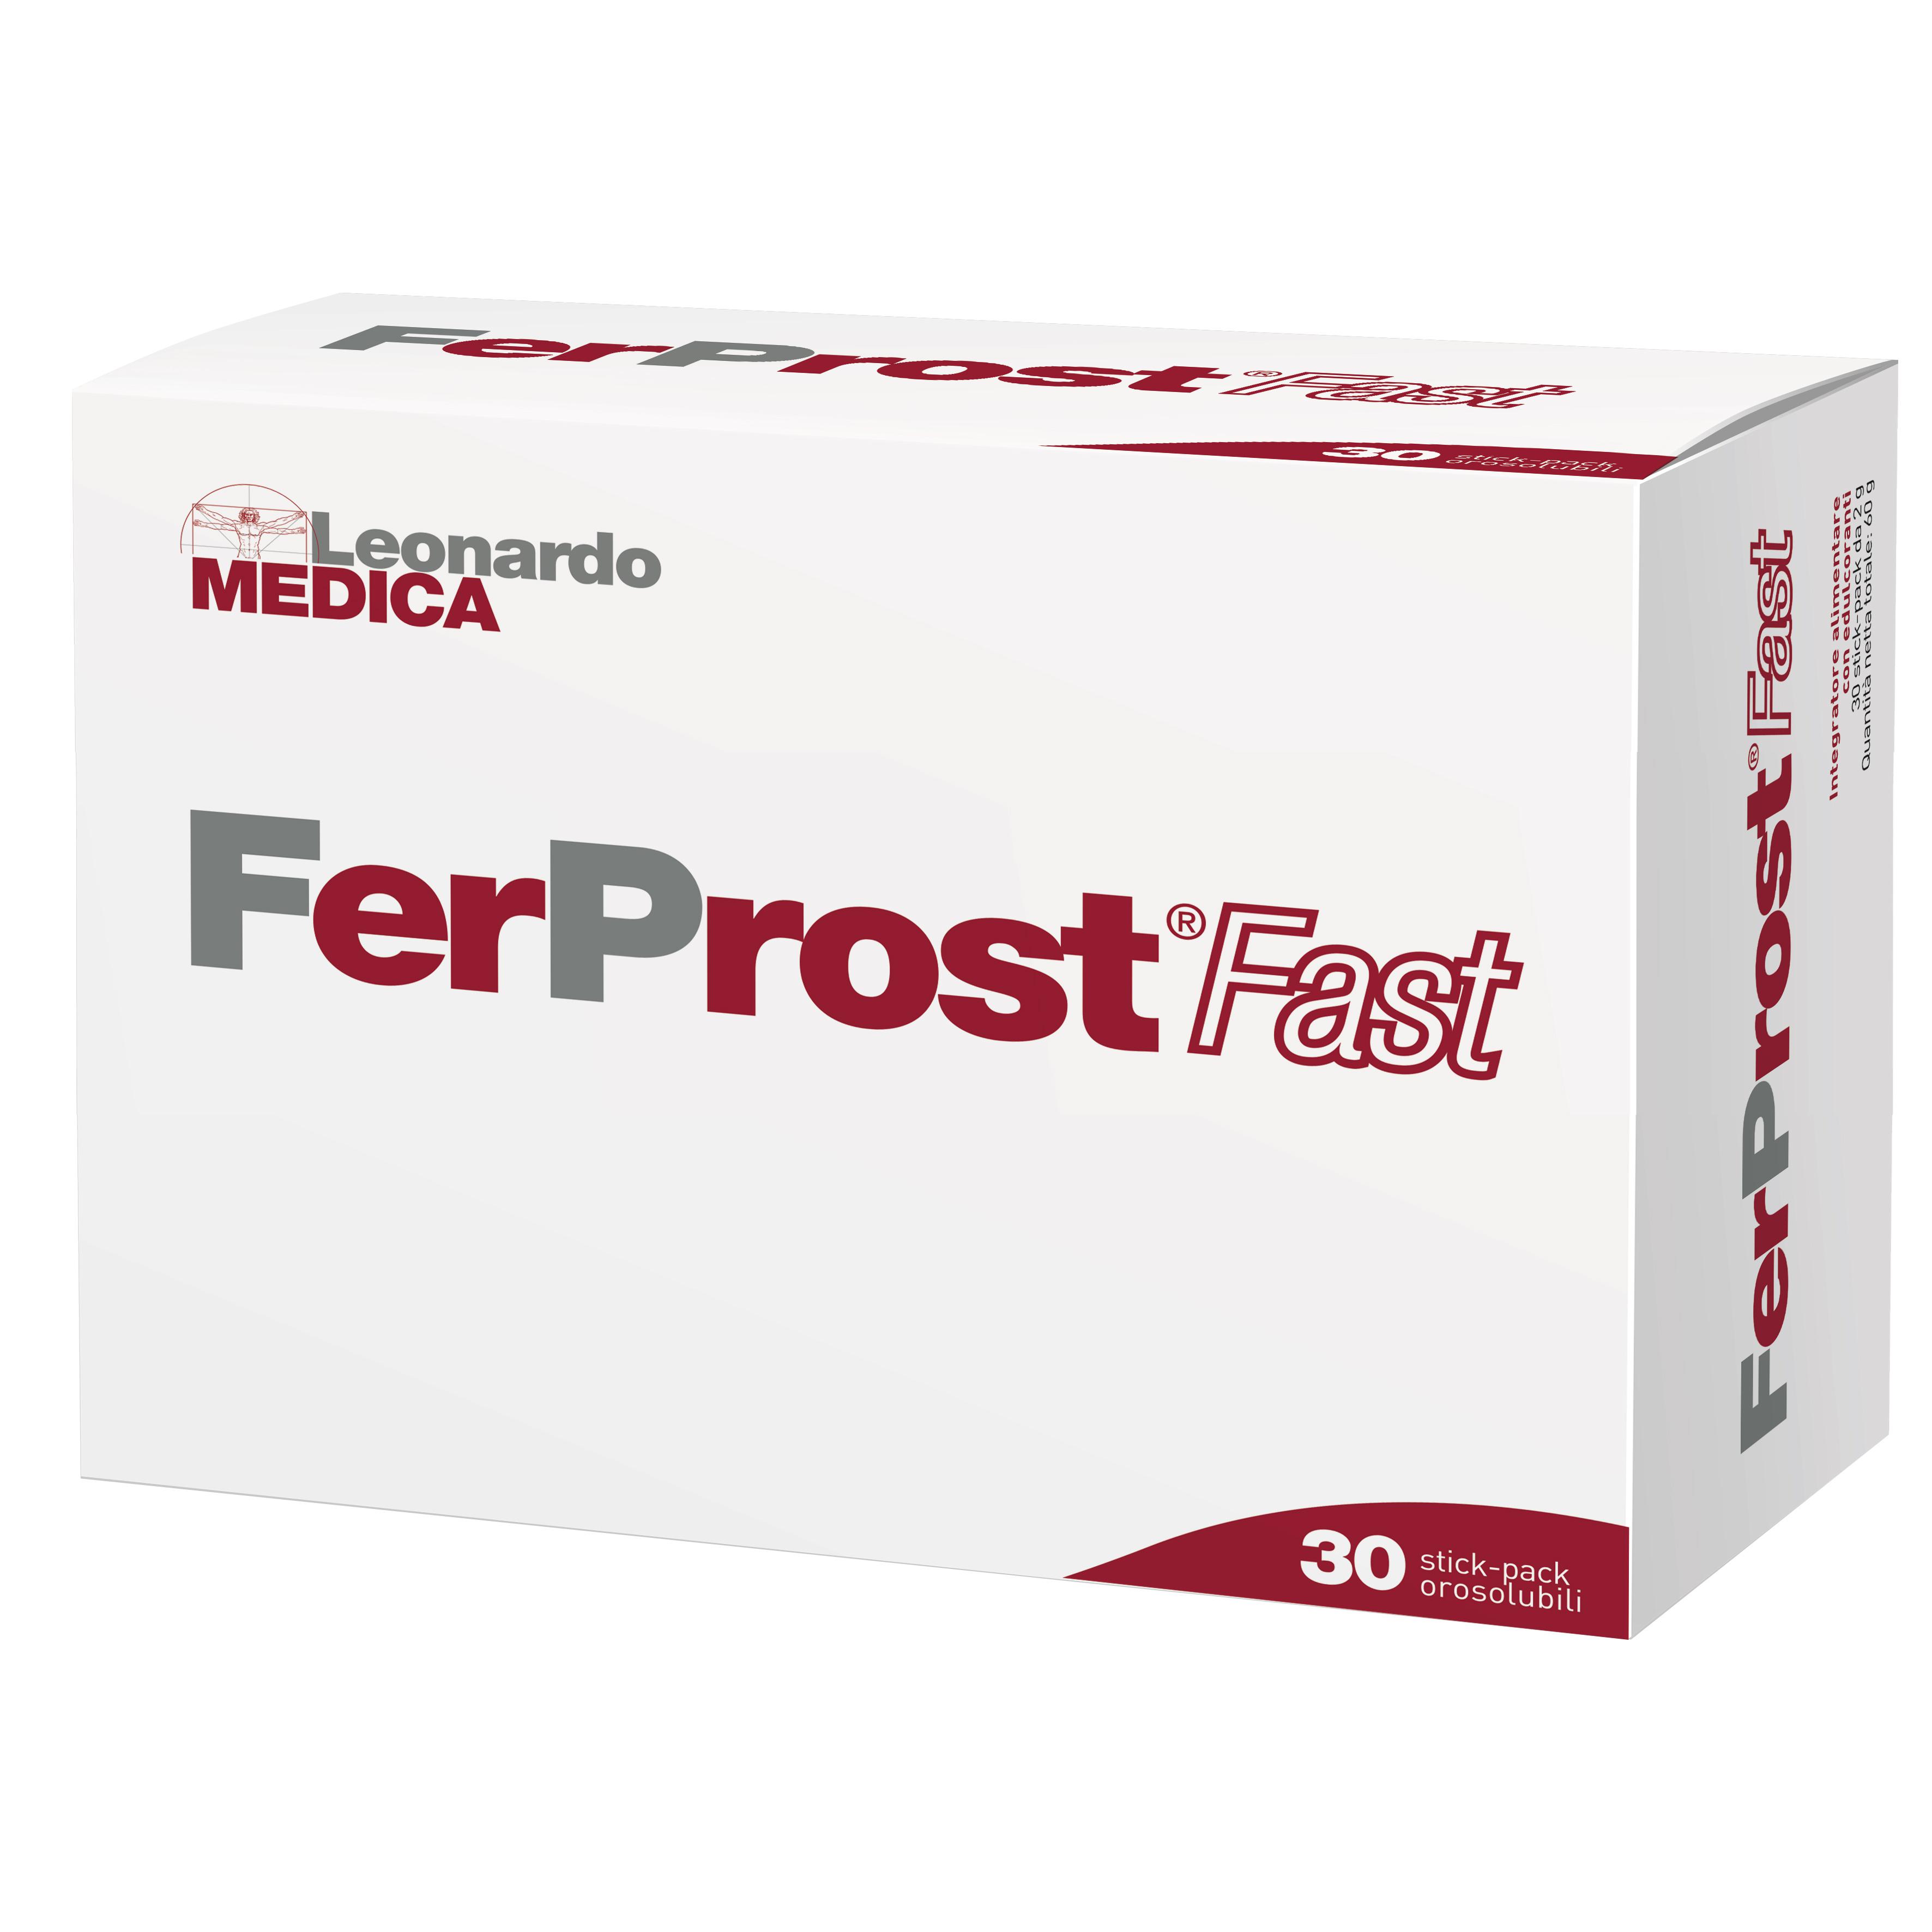 Ferprost Fast - 30 stick-pack orosolubili